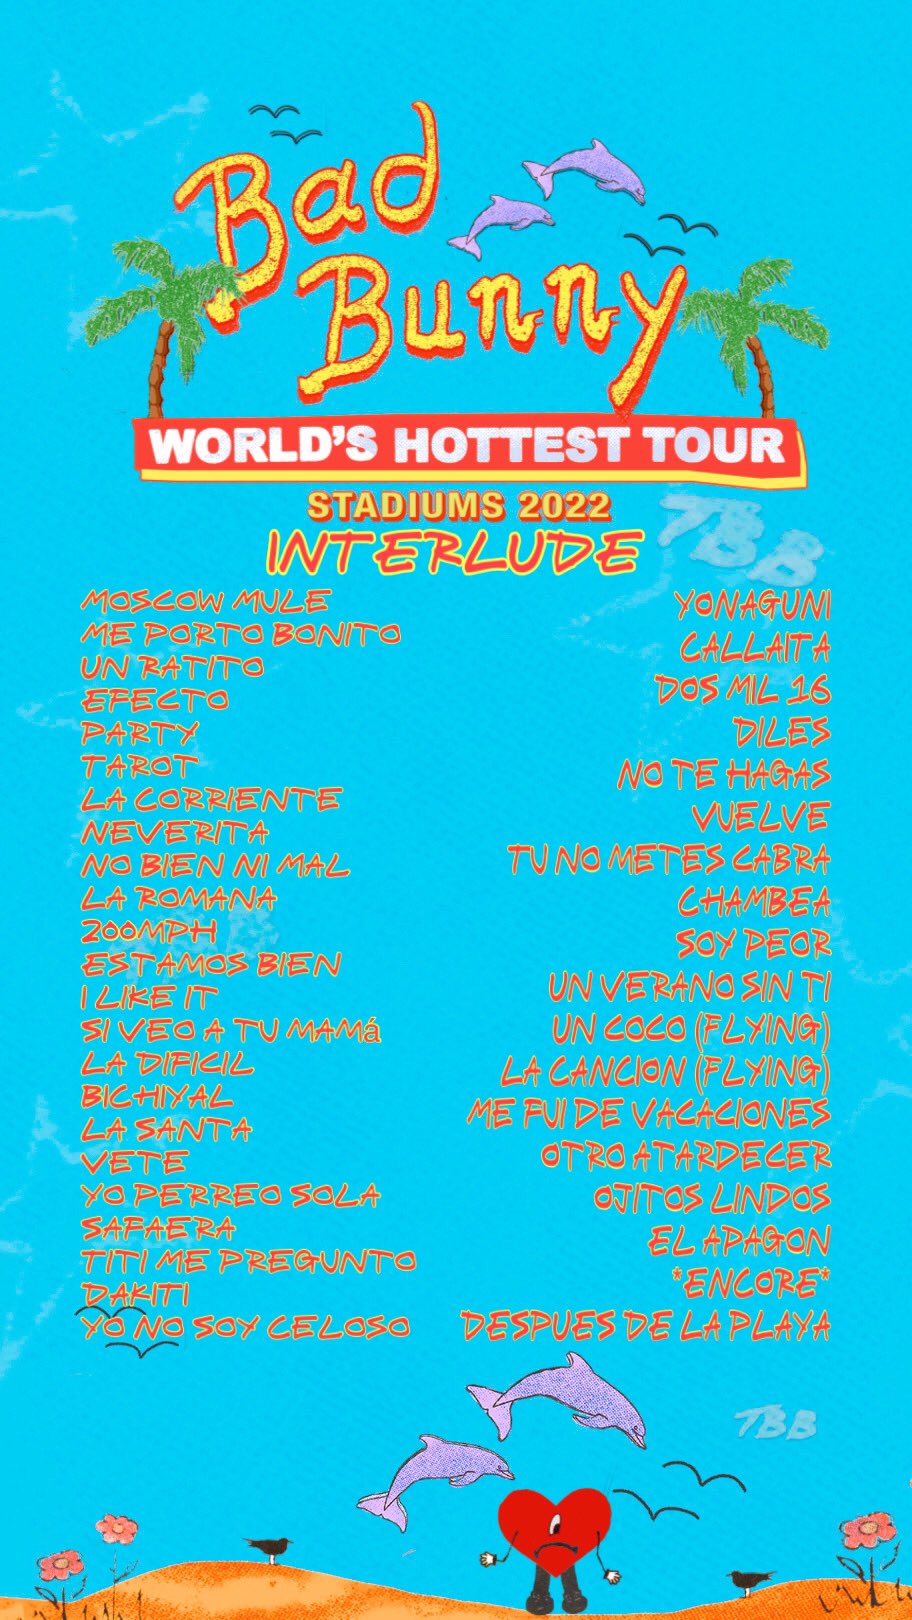 El World´s Hottest Tour de Bad Bunny ya tiene un posible setlist oficial!